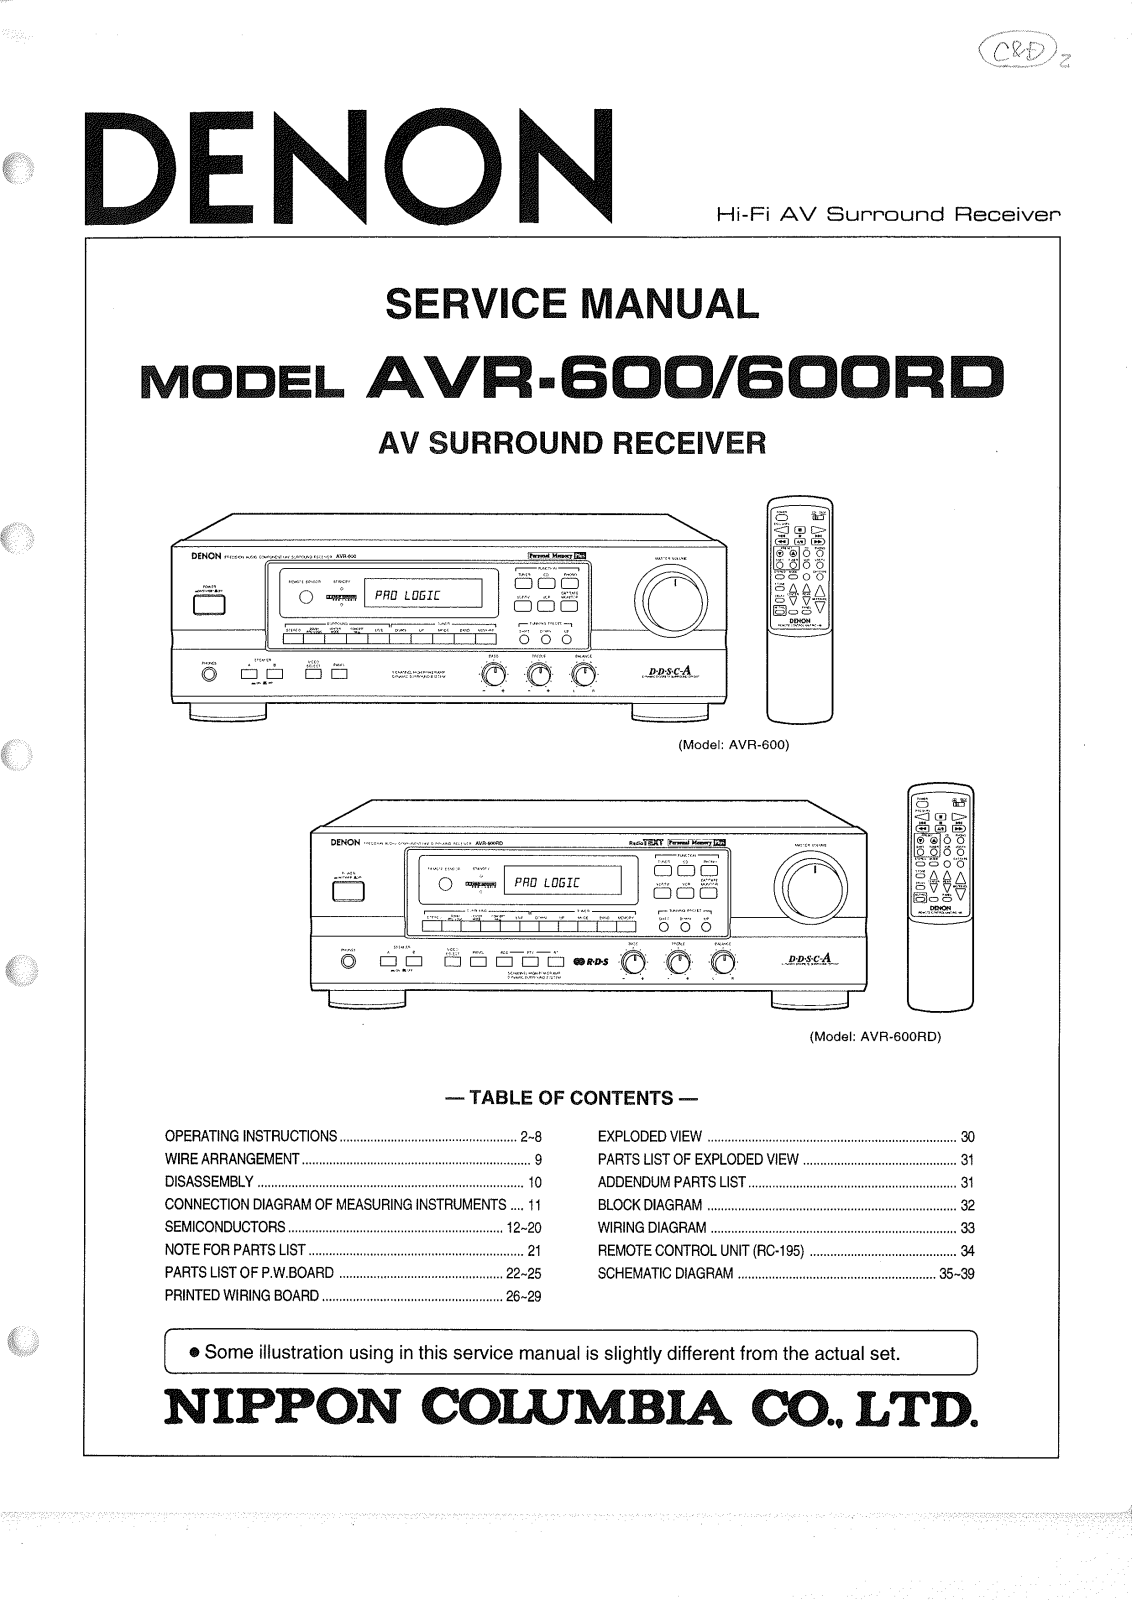 Denon AVR-600, AVR-600RD Service Manual